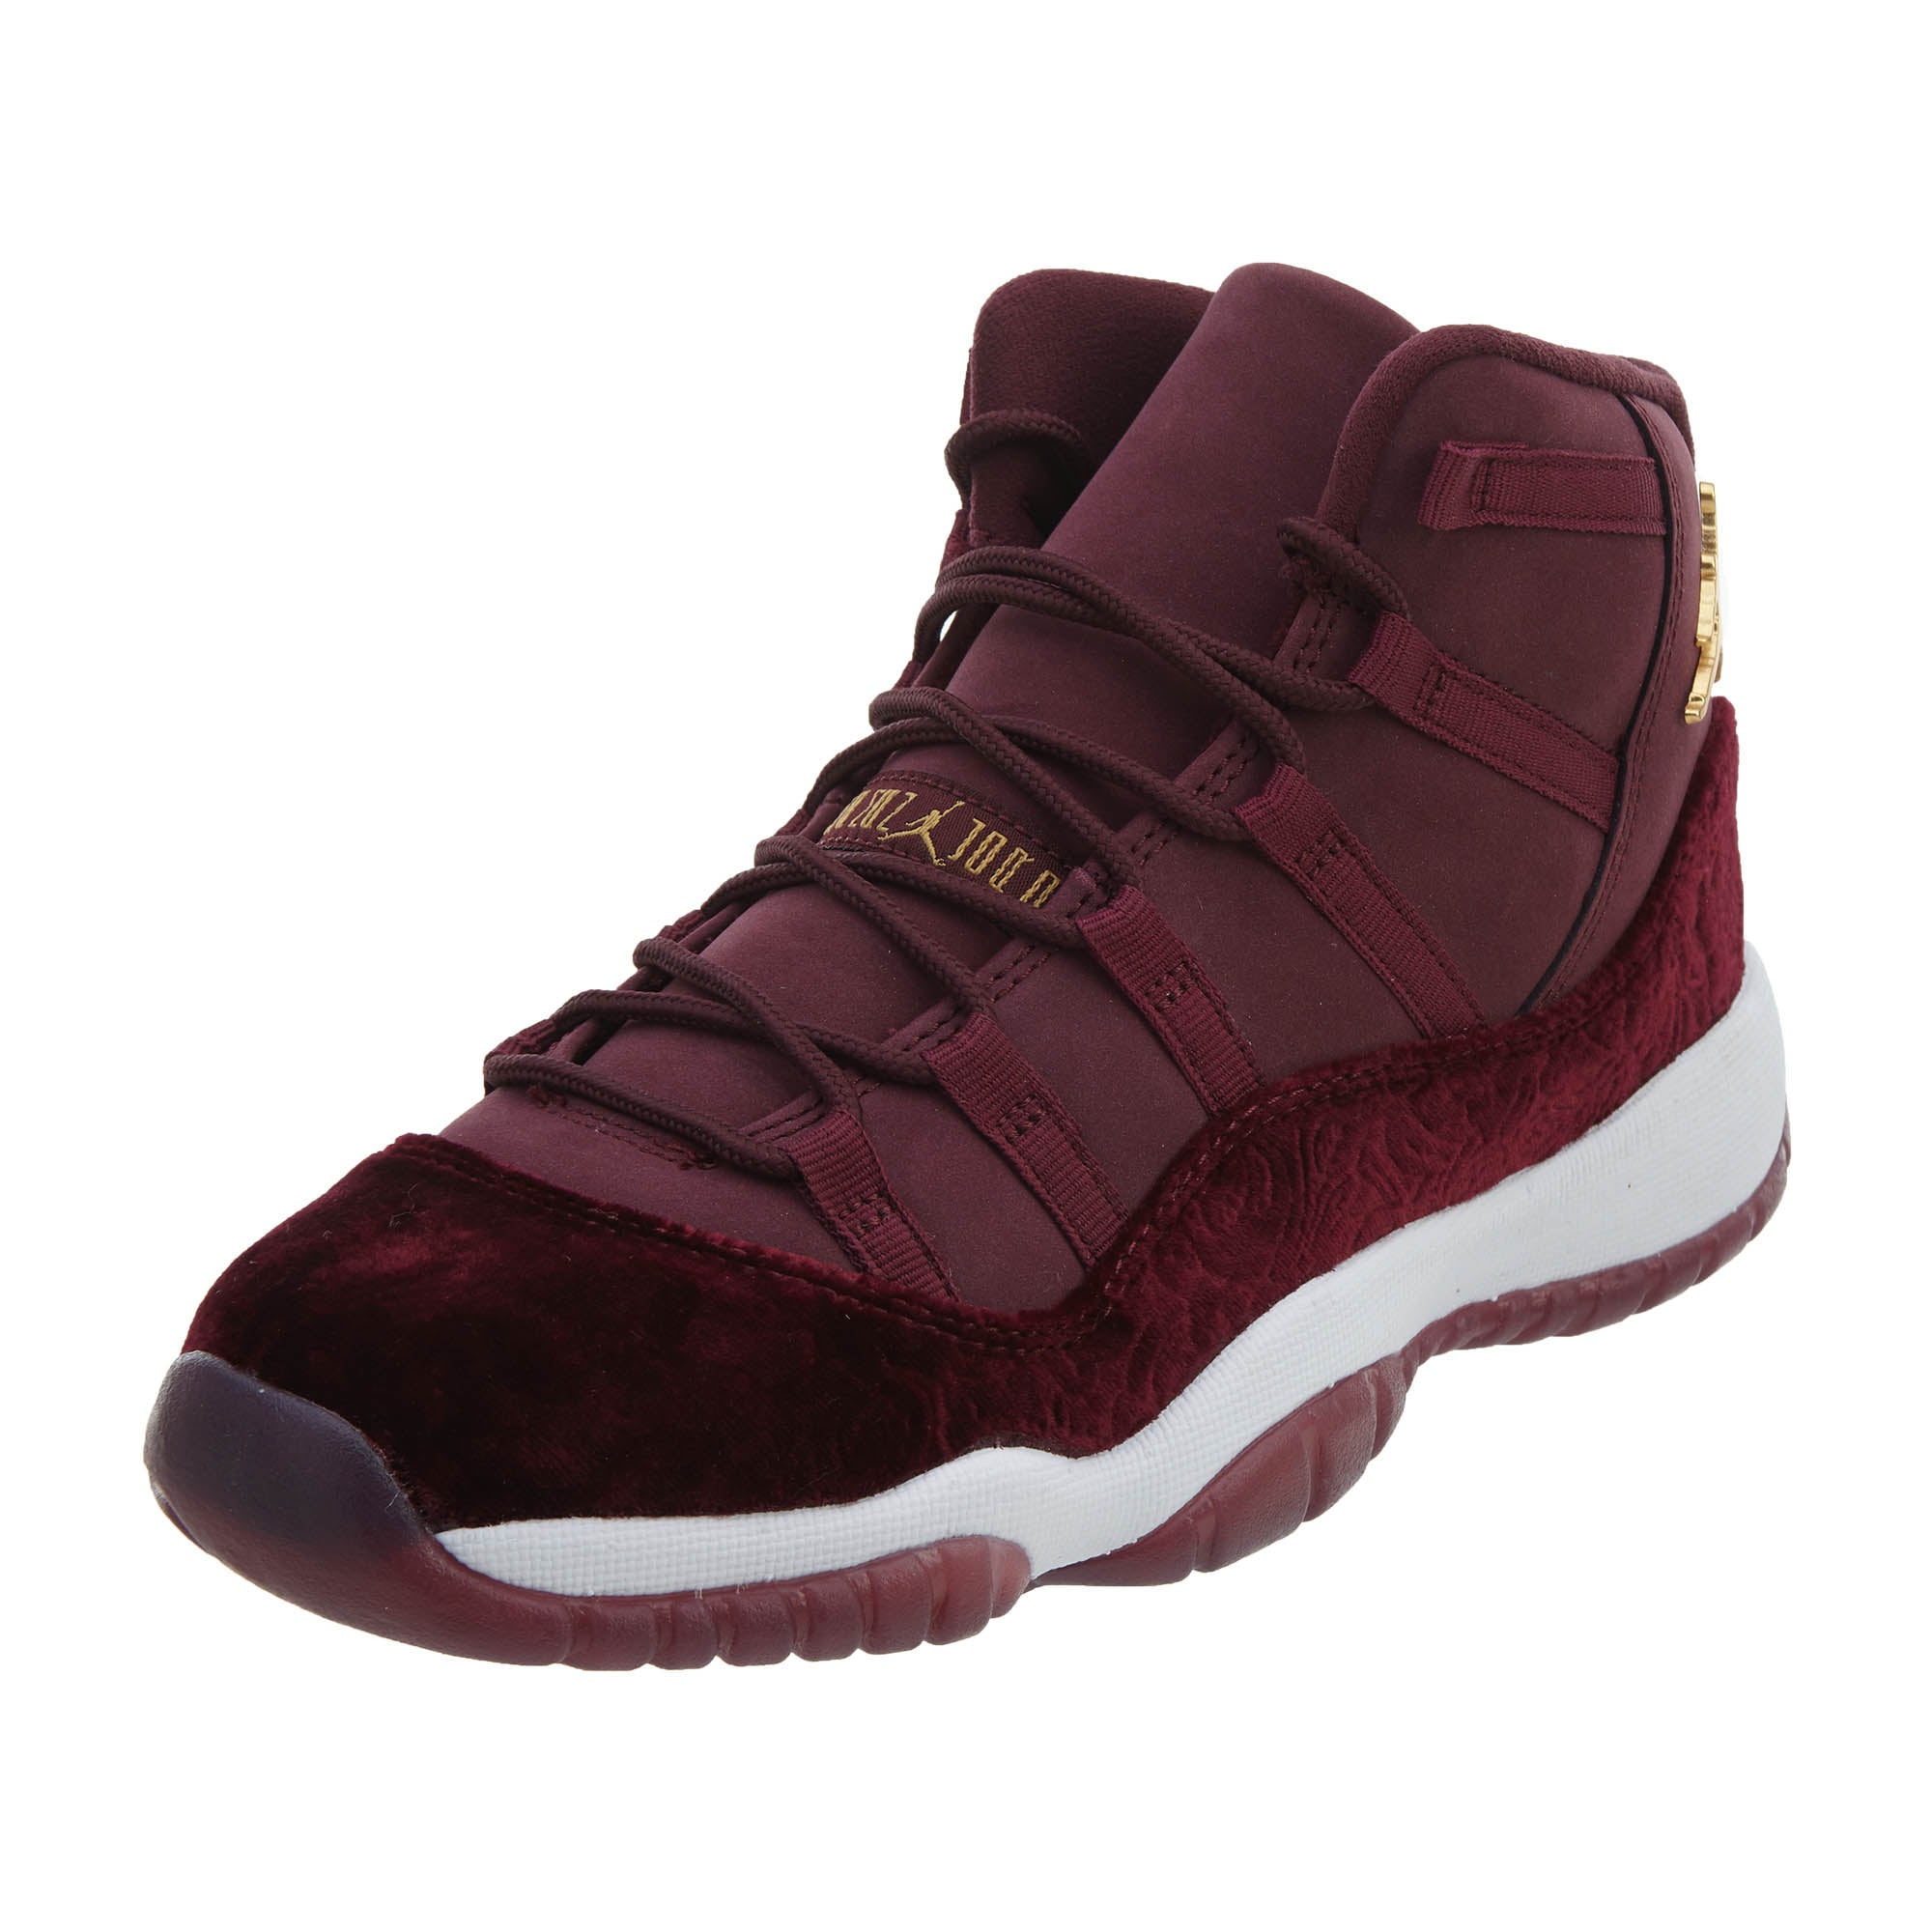 Air Jordan 11 Retro RL GG  Basketball Shoes  #852625-650